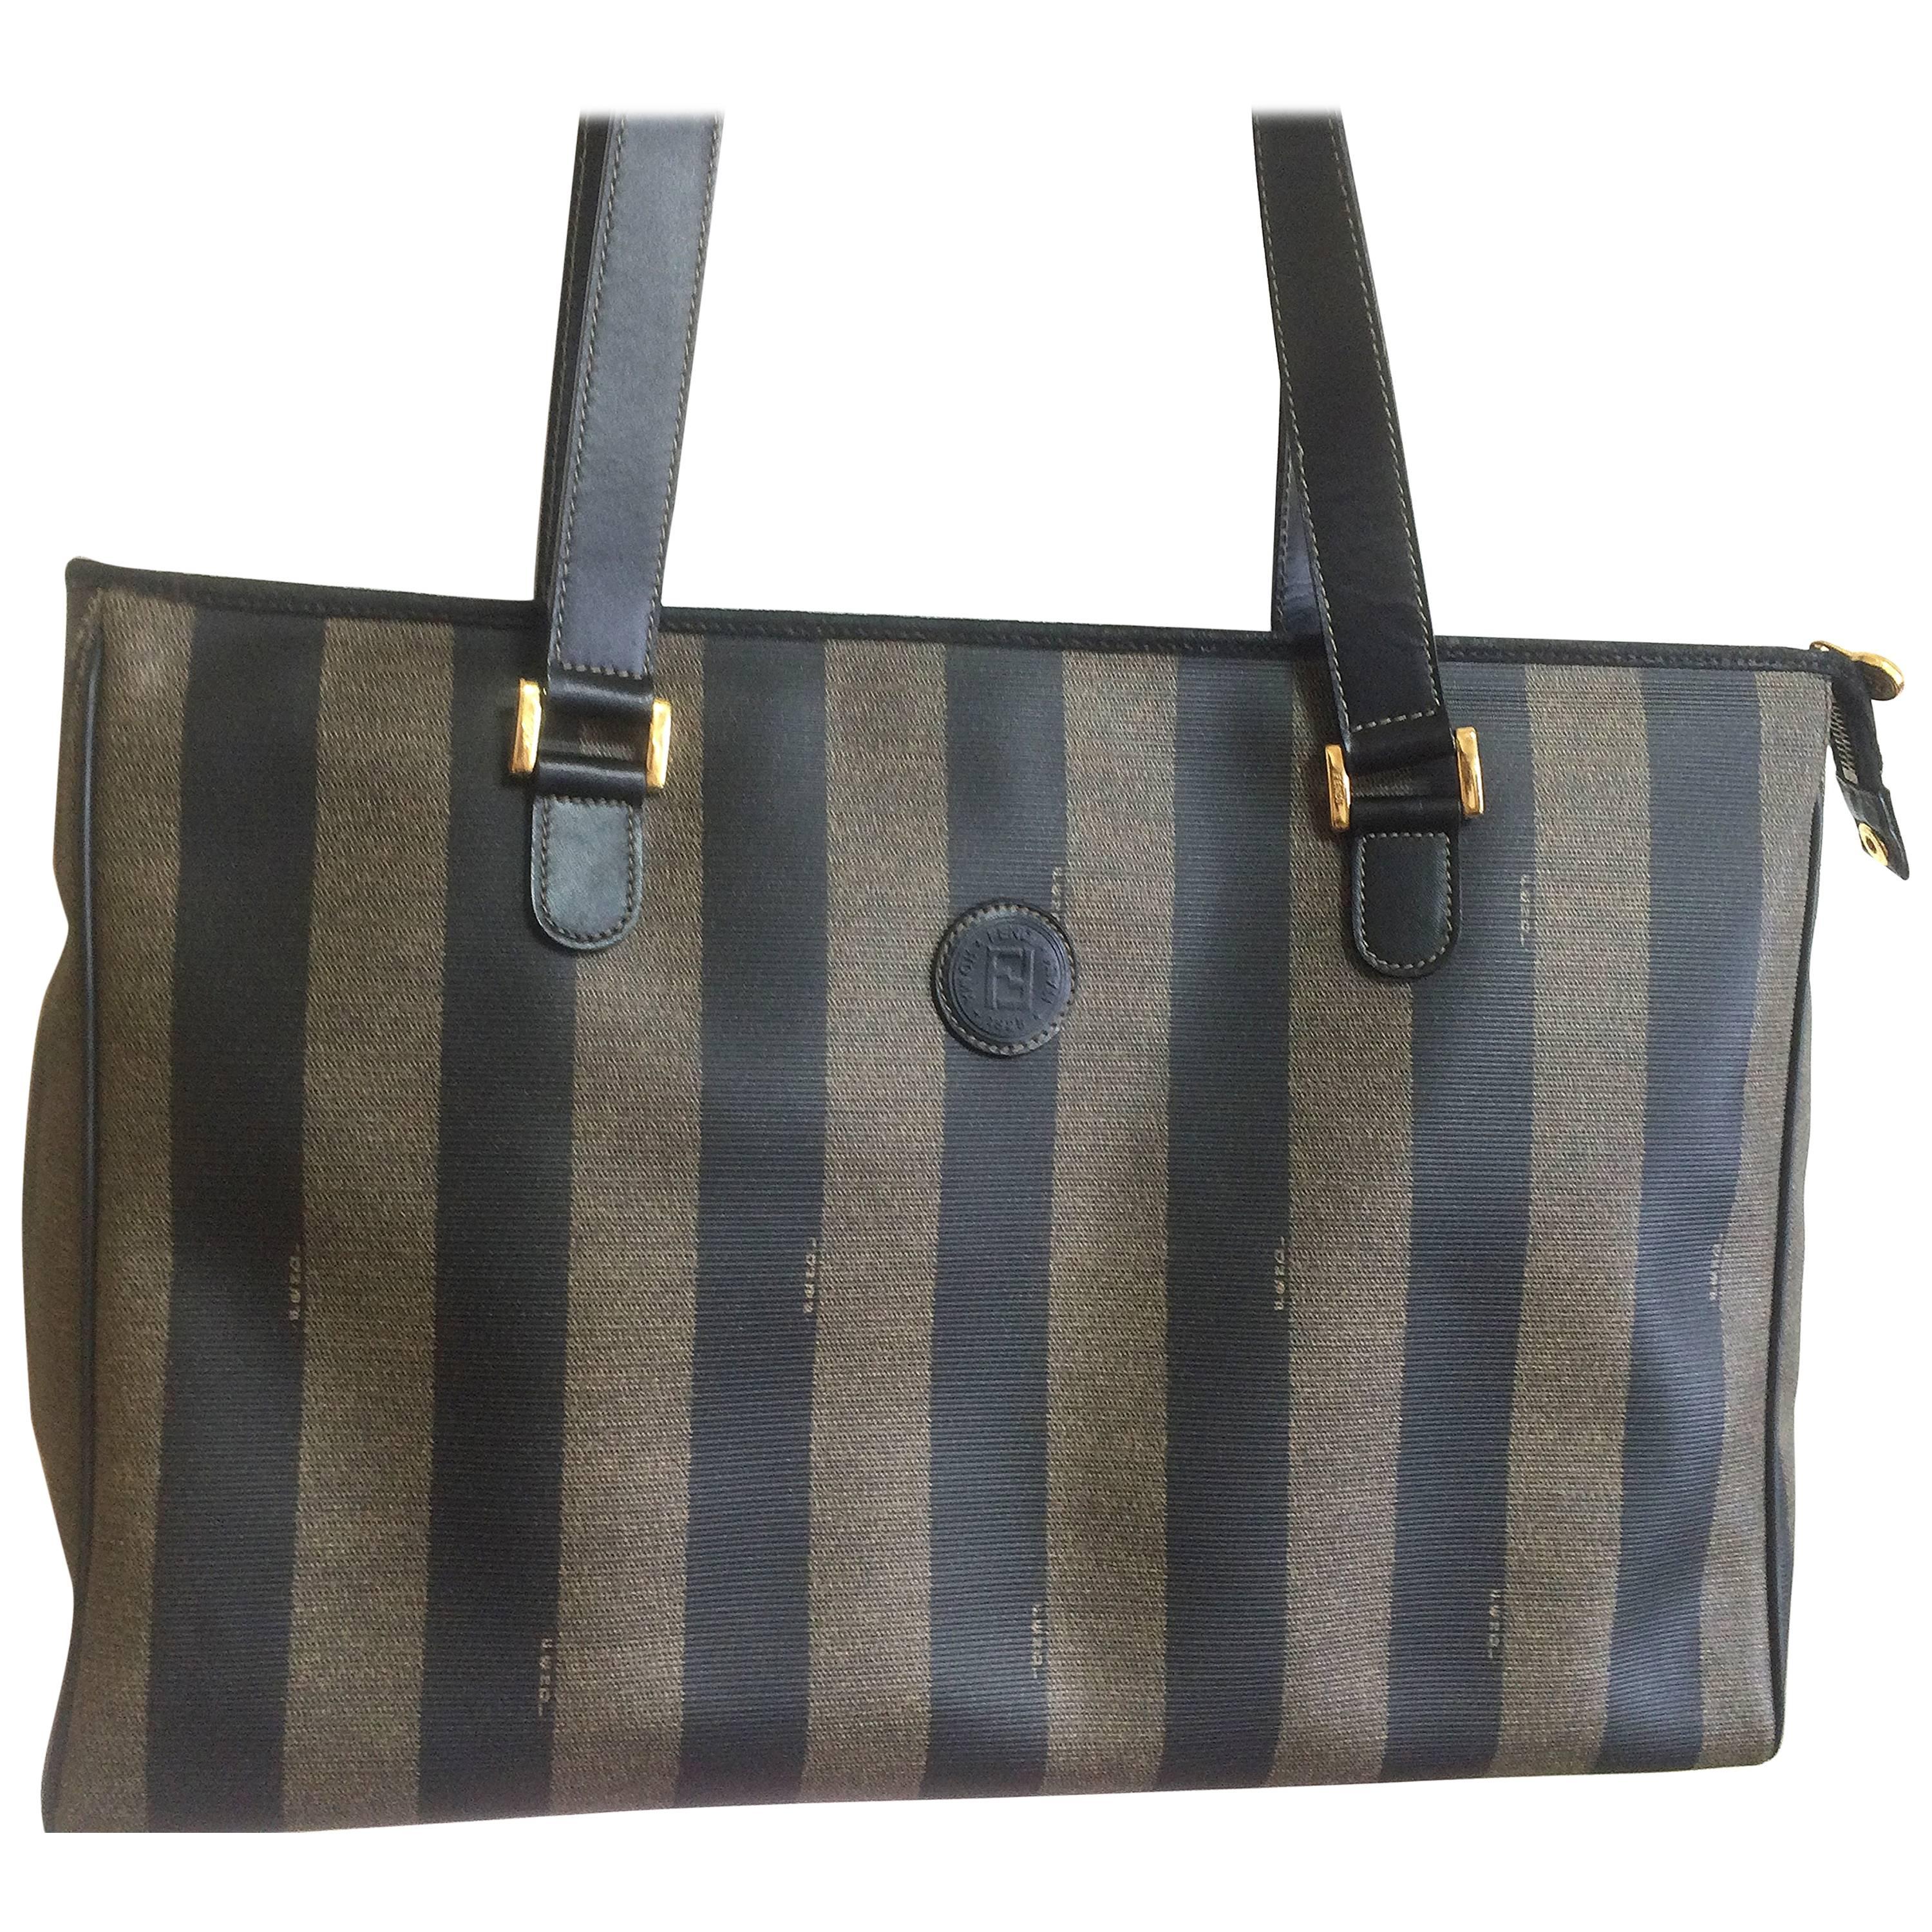 Vintage FENDI classic pecan stripe pattern shopper tote bag with black leather.